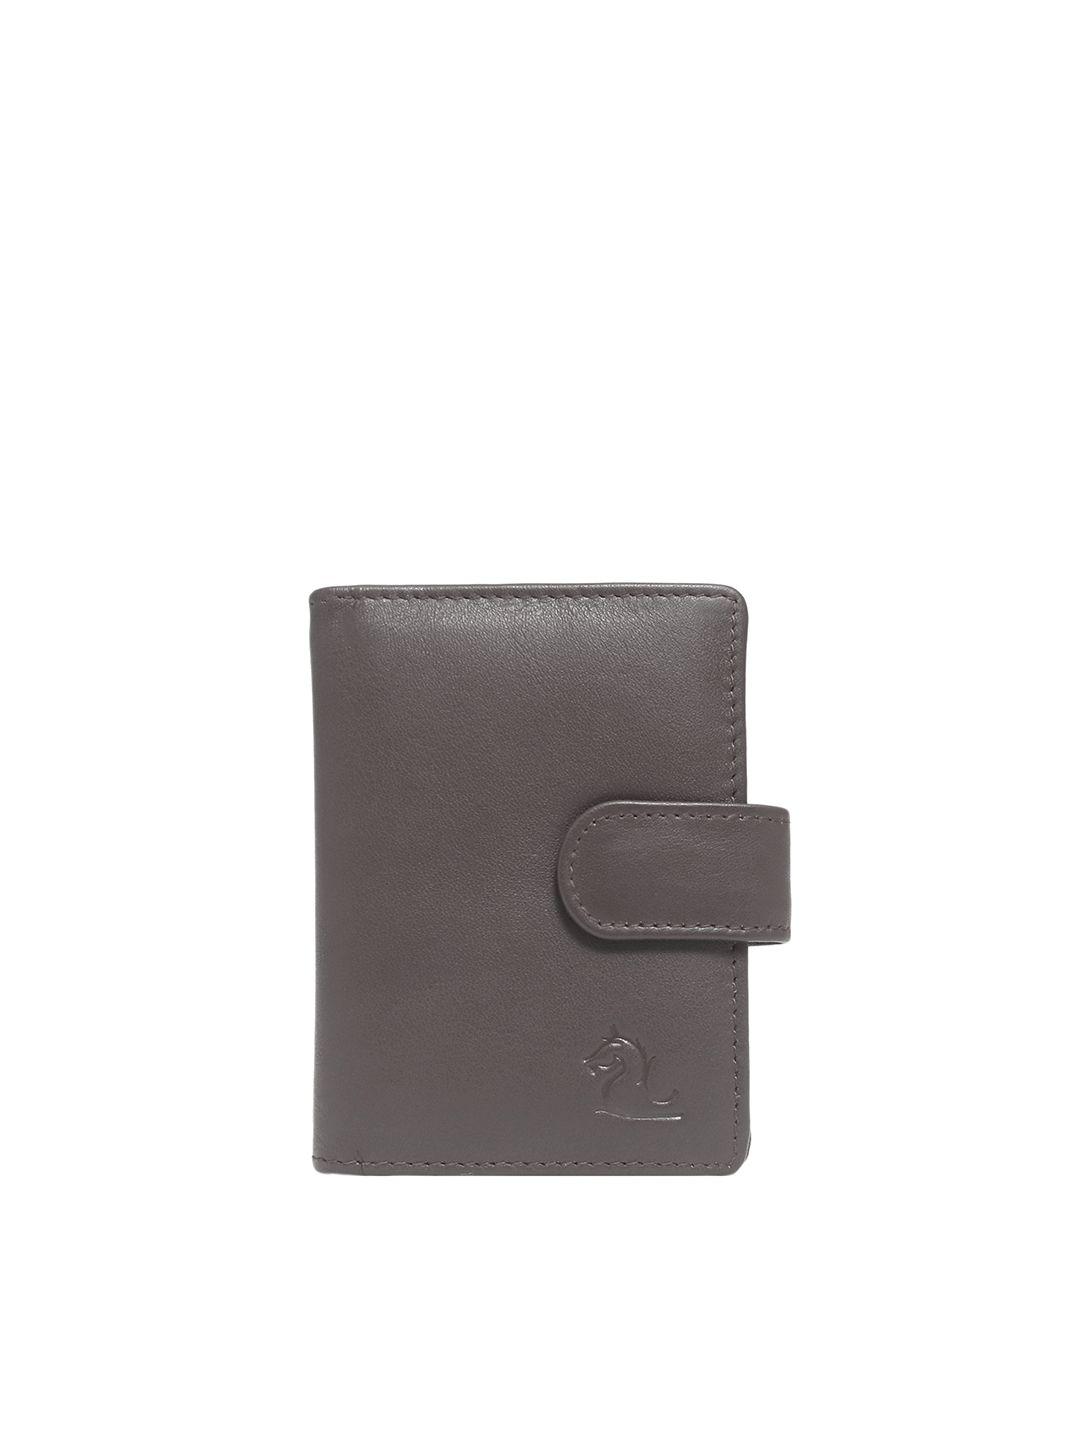 kara men brown leather card holder